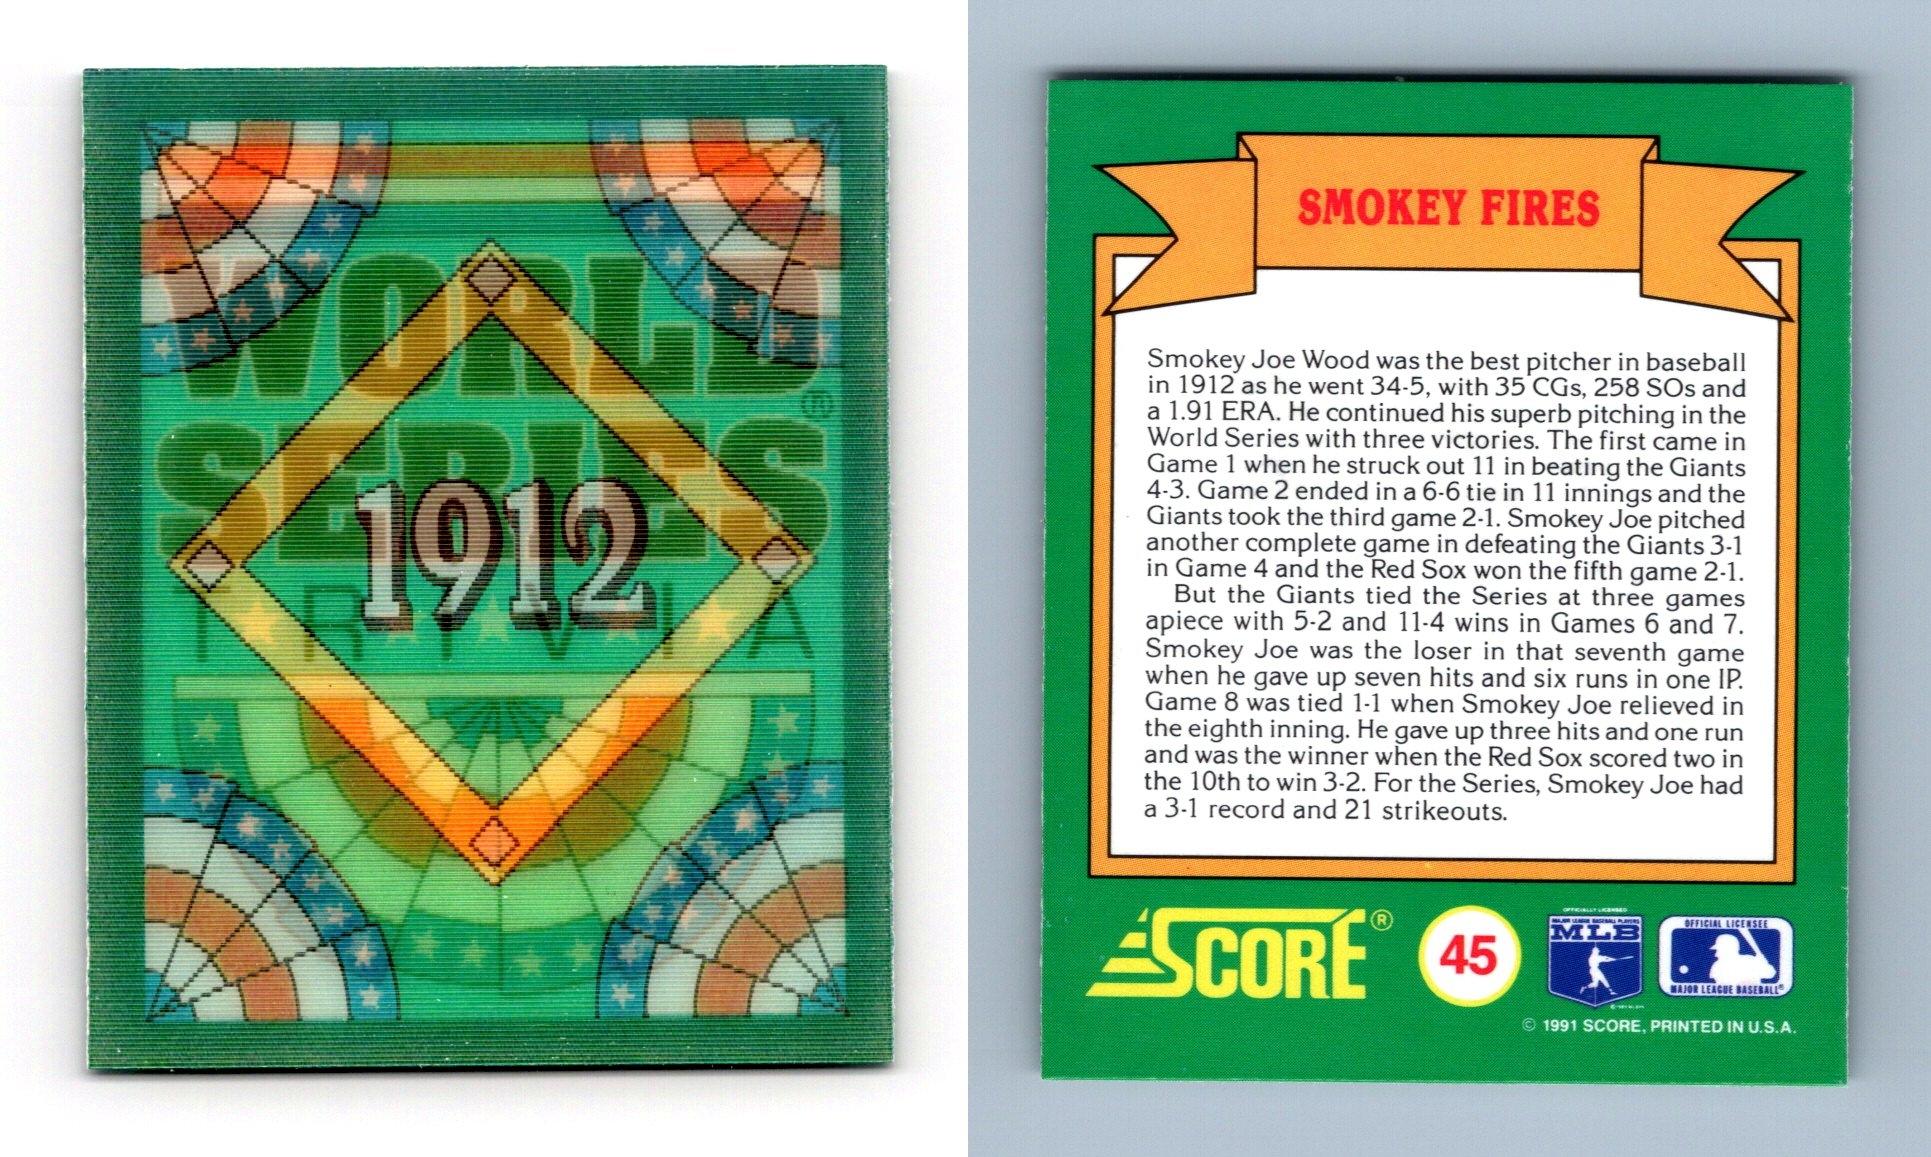 Dave Justice - Braves #861 Score 1991 Baseball The Franchise